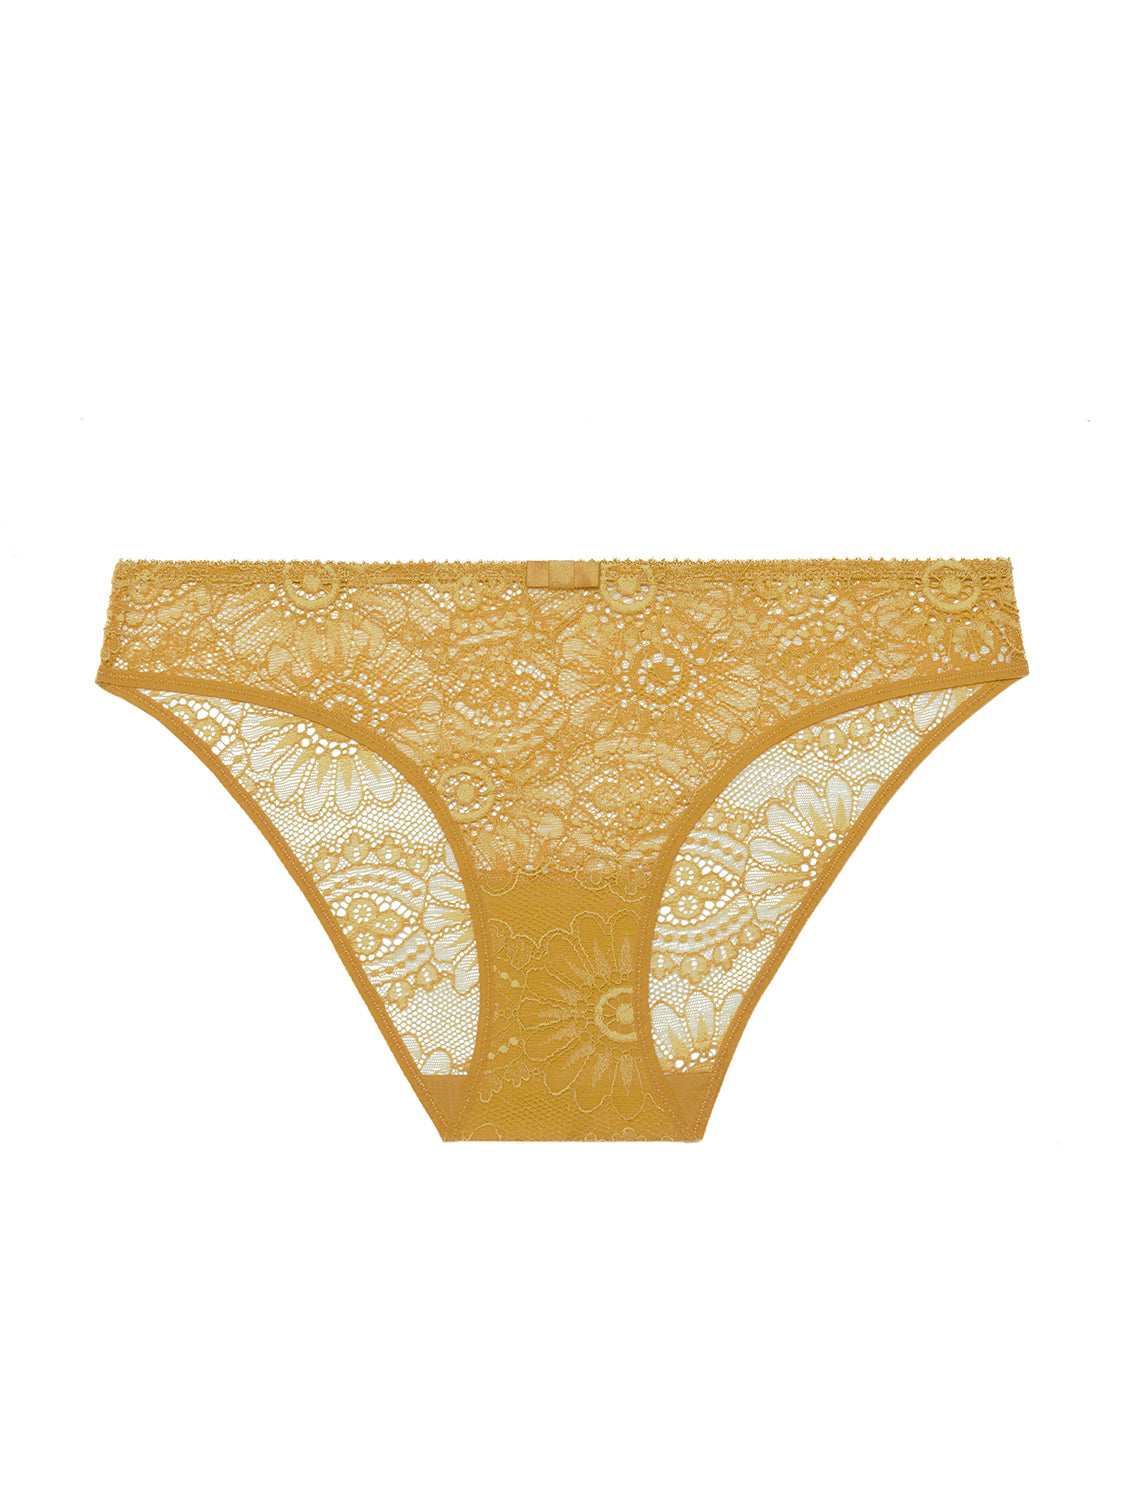 culotte-golden-yellow-embleme-21